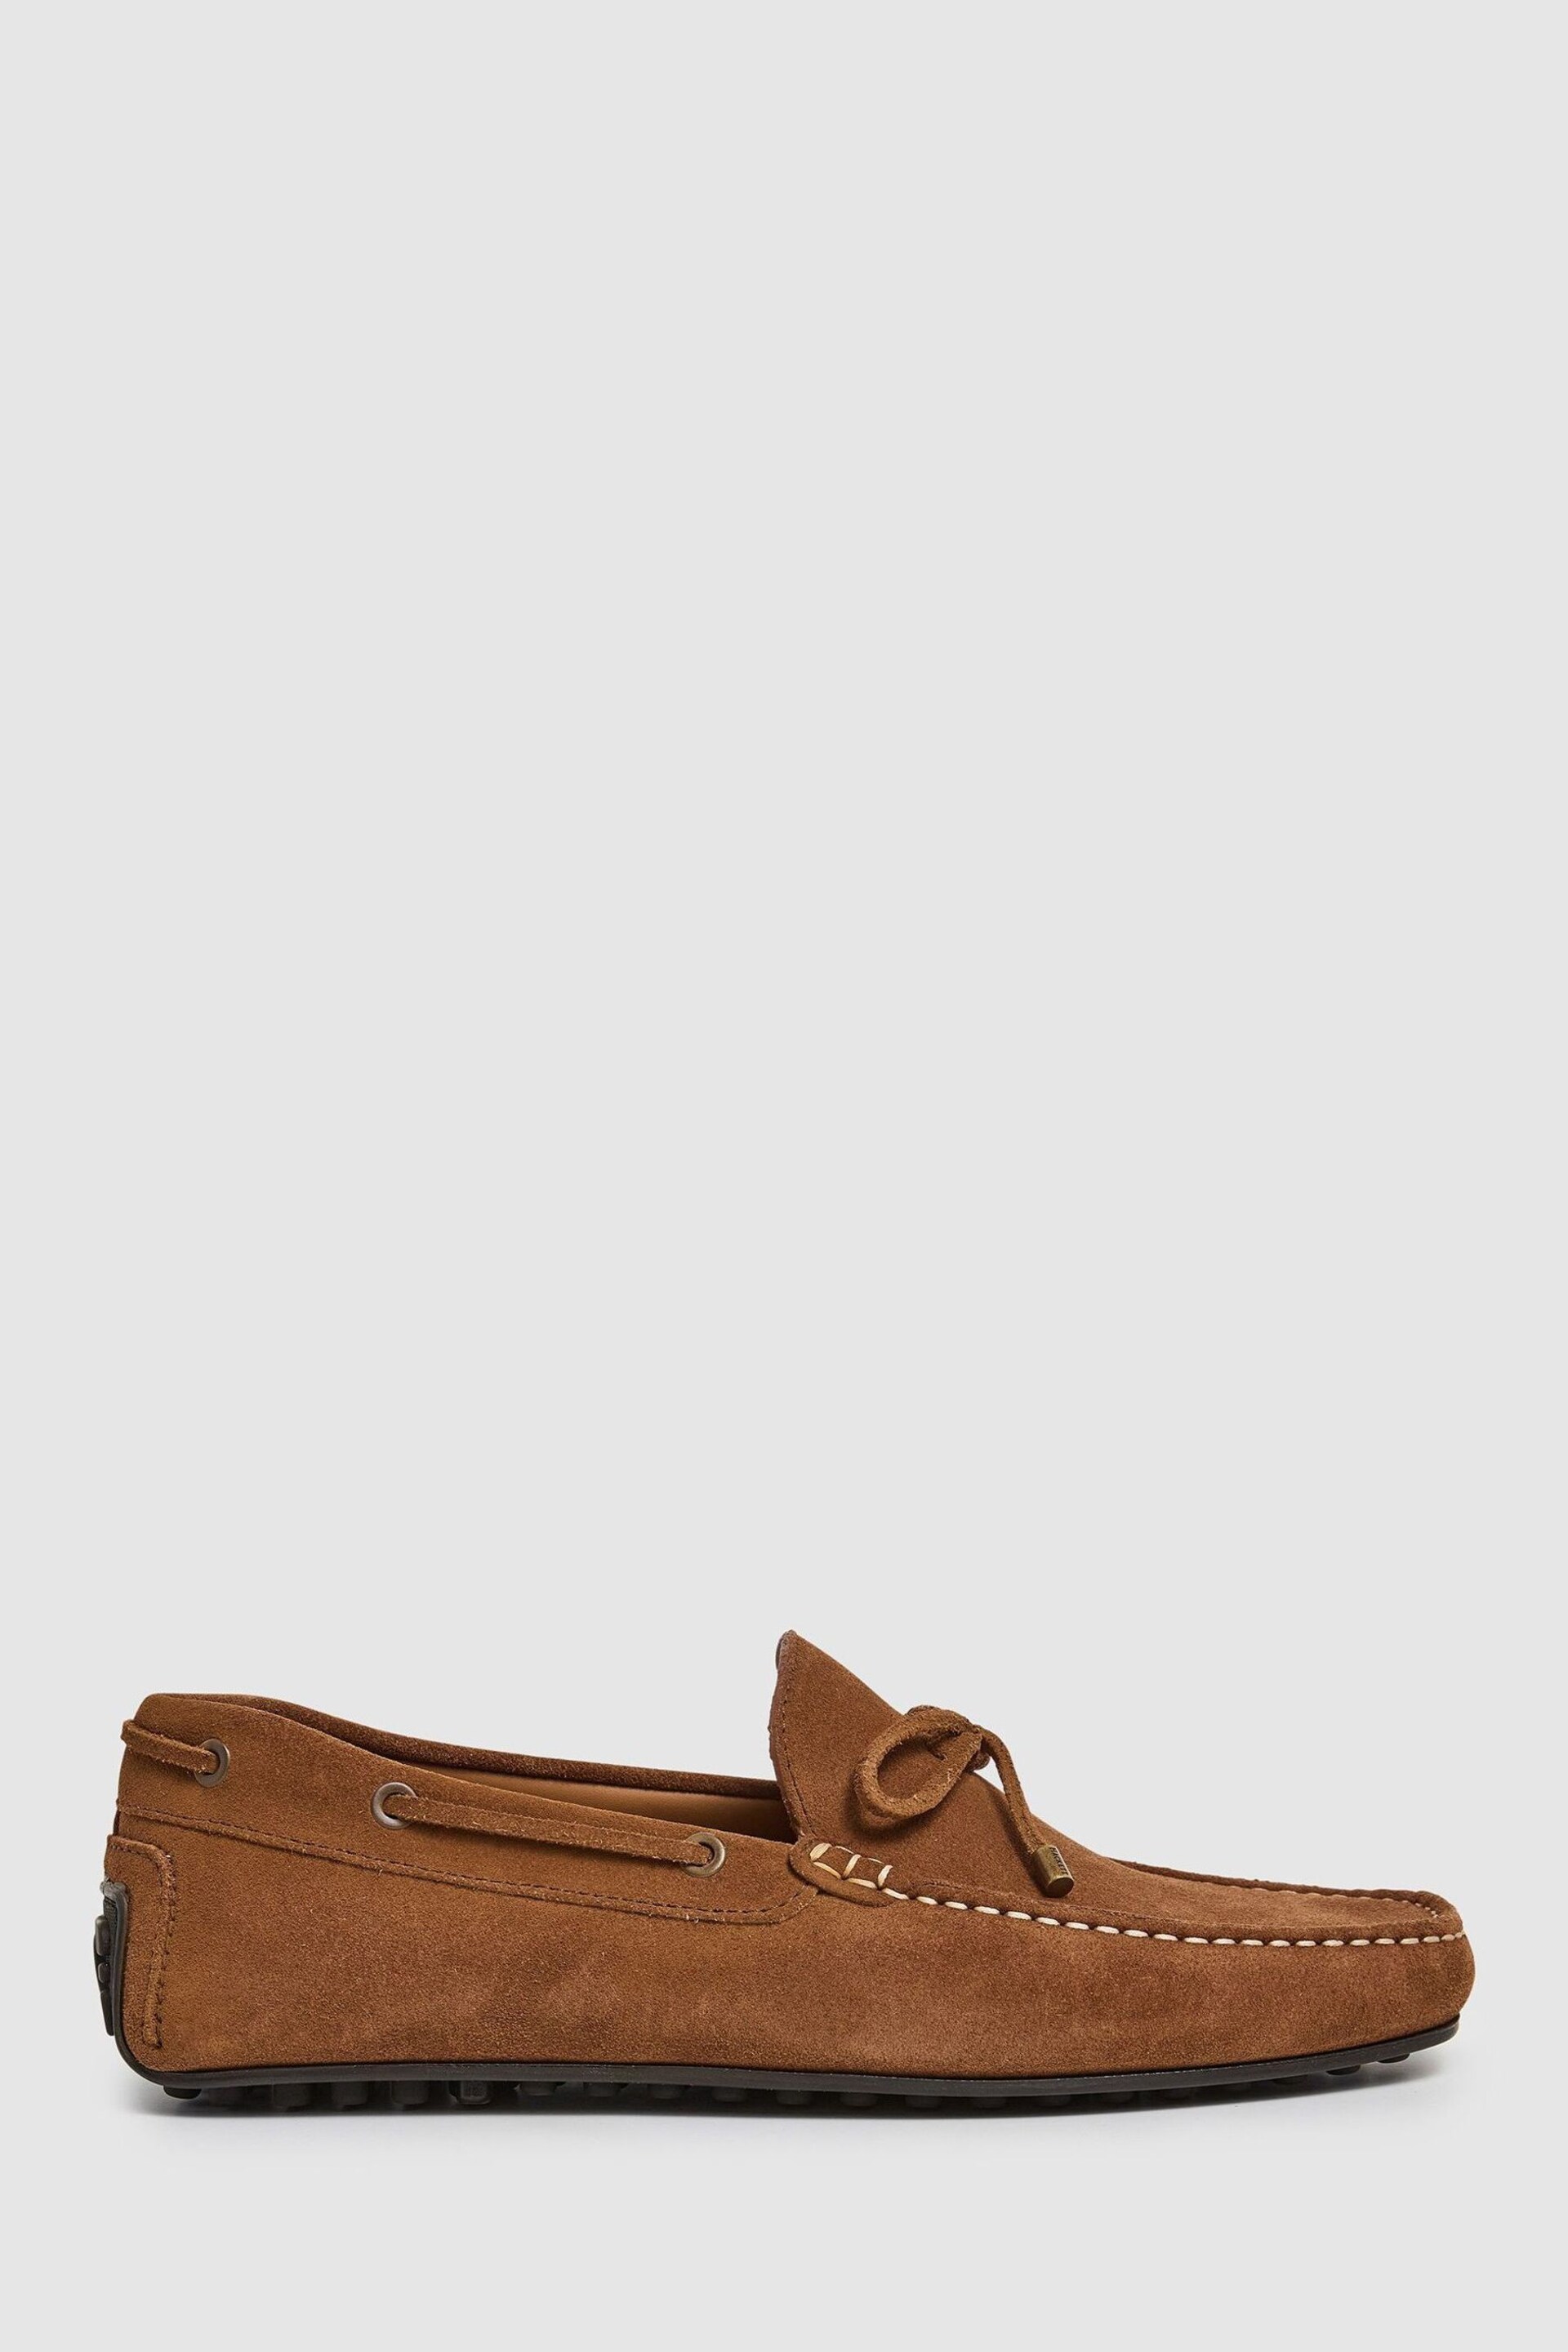 Hackett London Men Regular Brown Shoes - Image 1 of 6